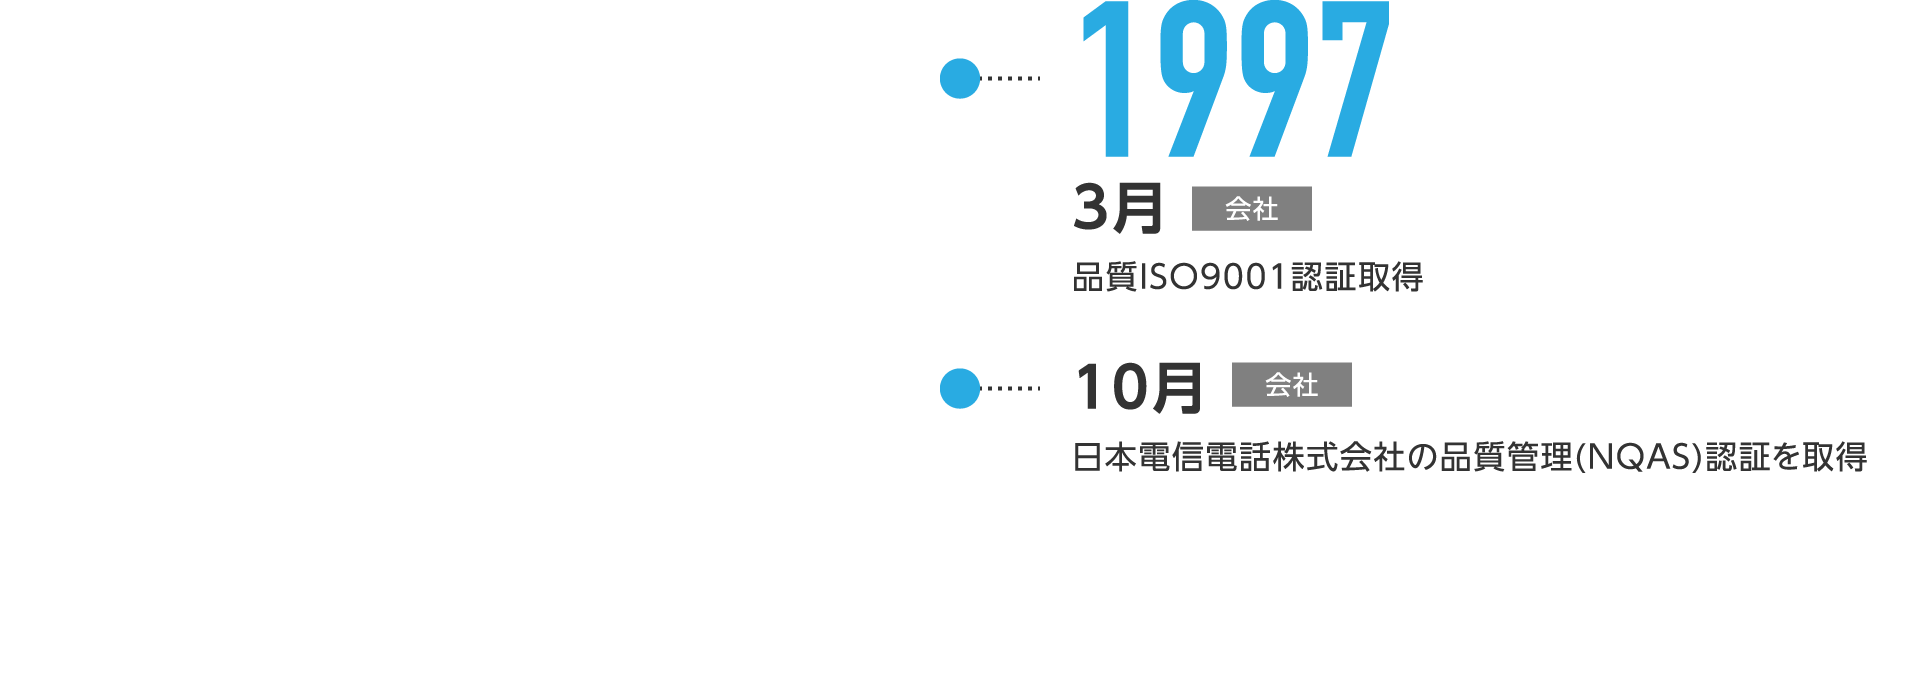 1997年3月-品質ISO9001認証取得、10月-日本電信電話株式会社の品質管理(NQAS)認証を取得